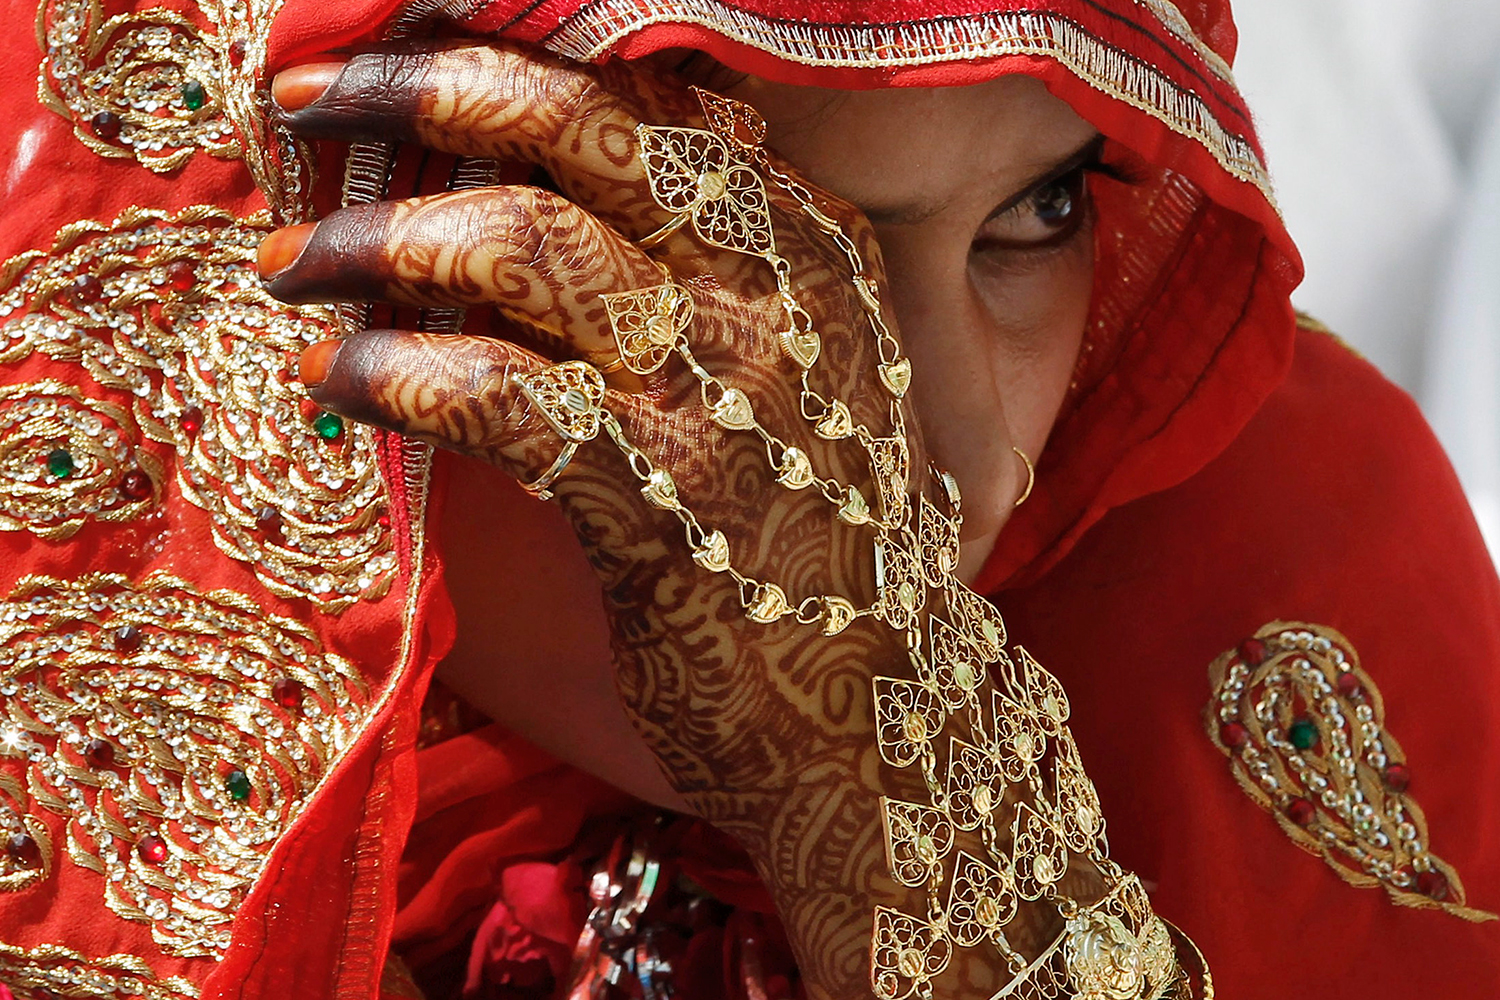 Las escasez de mujeres solteras en India obliga a los hombres a buscar esposas a miles de kilómetros